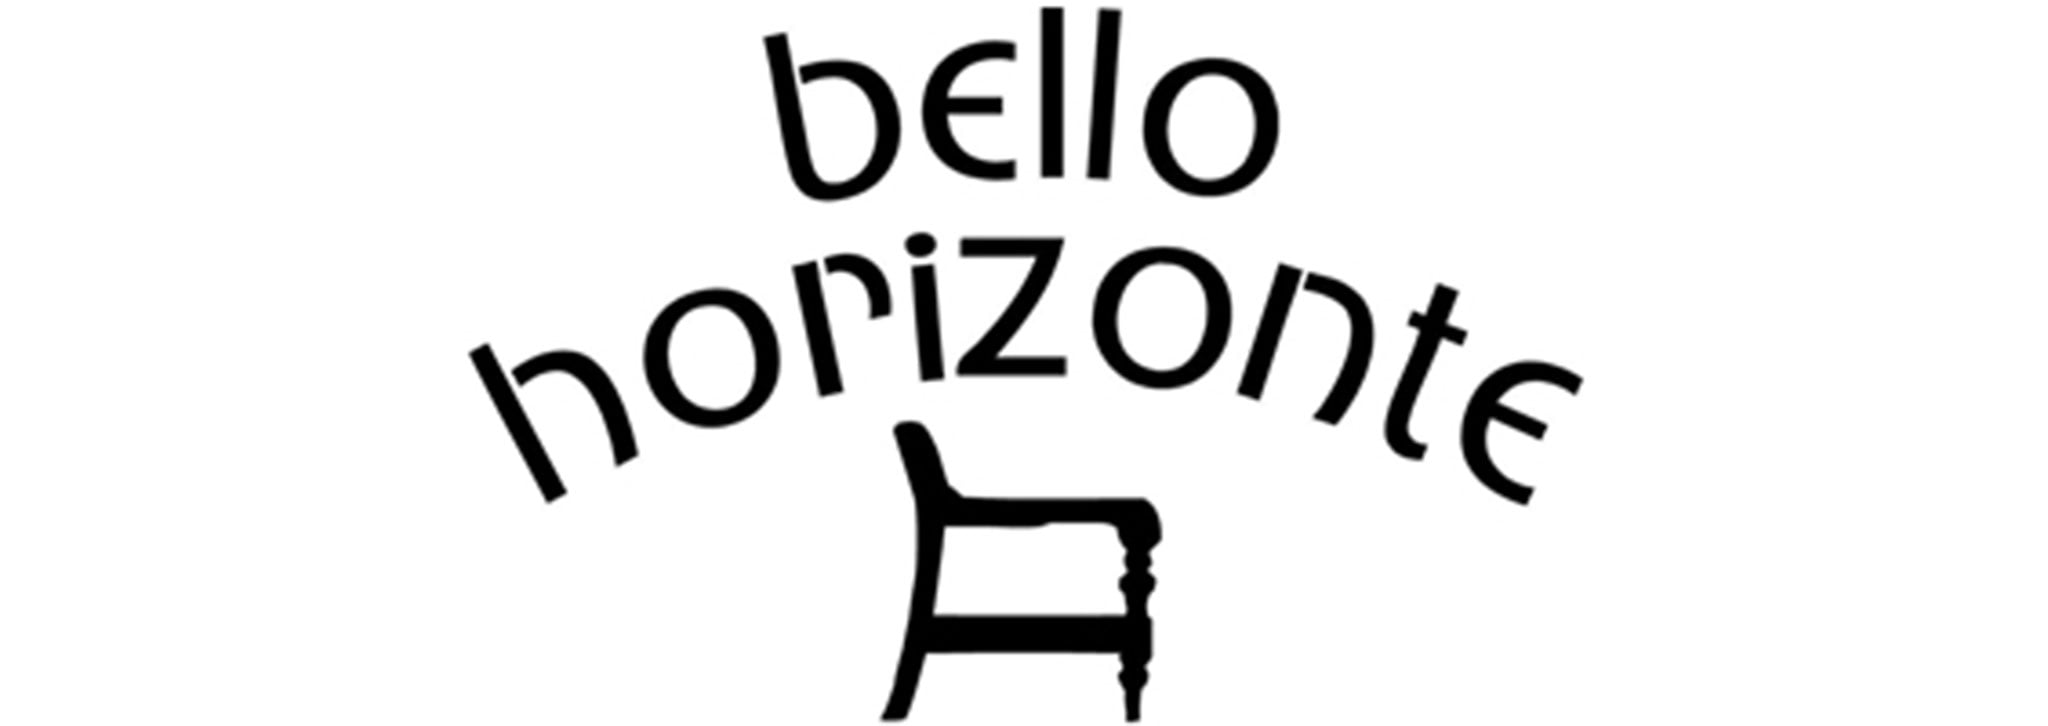 Logotipo Bello Horizonte